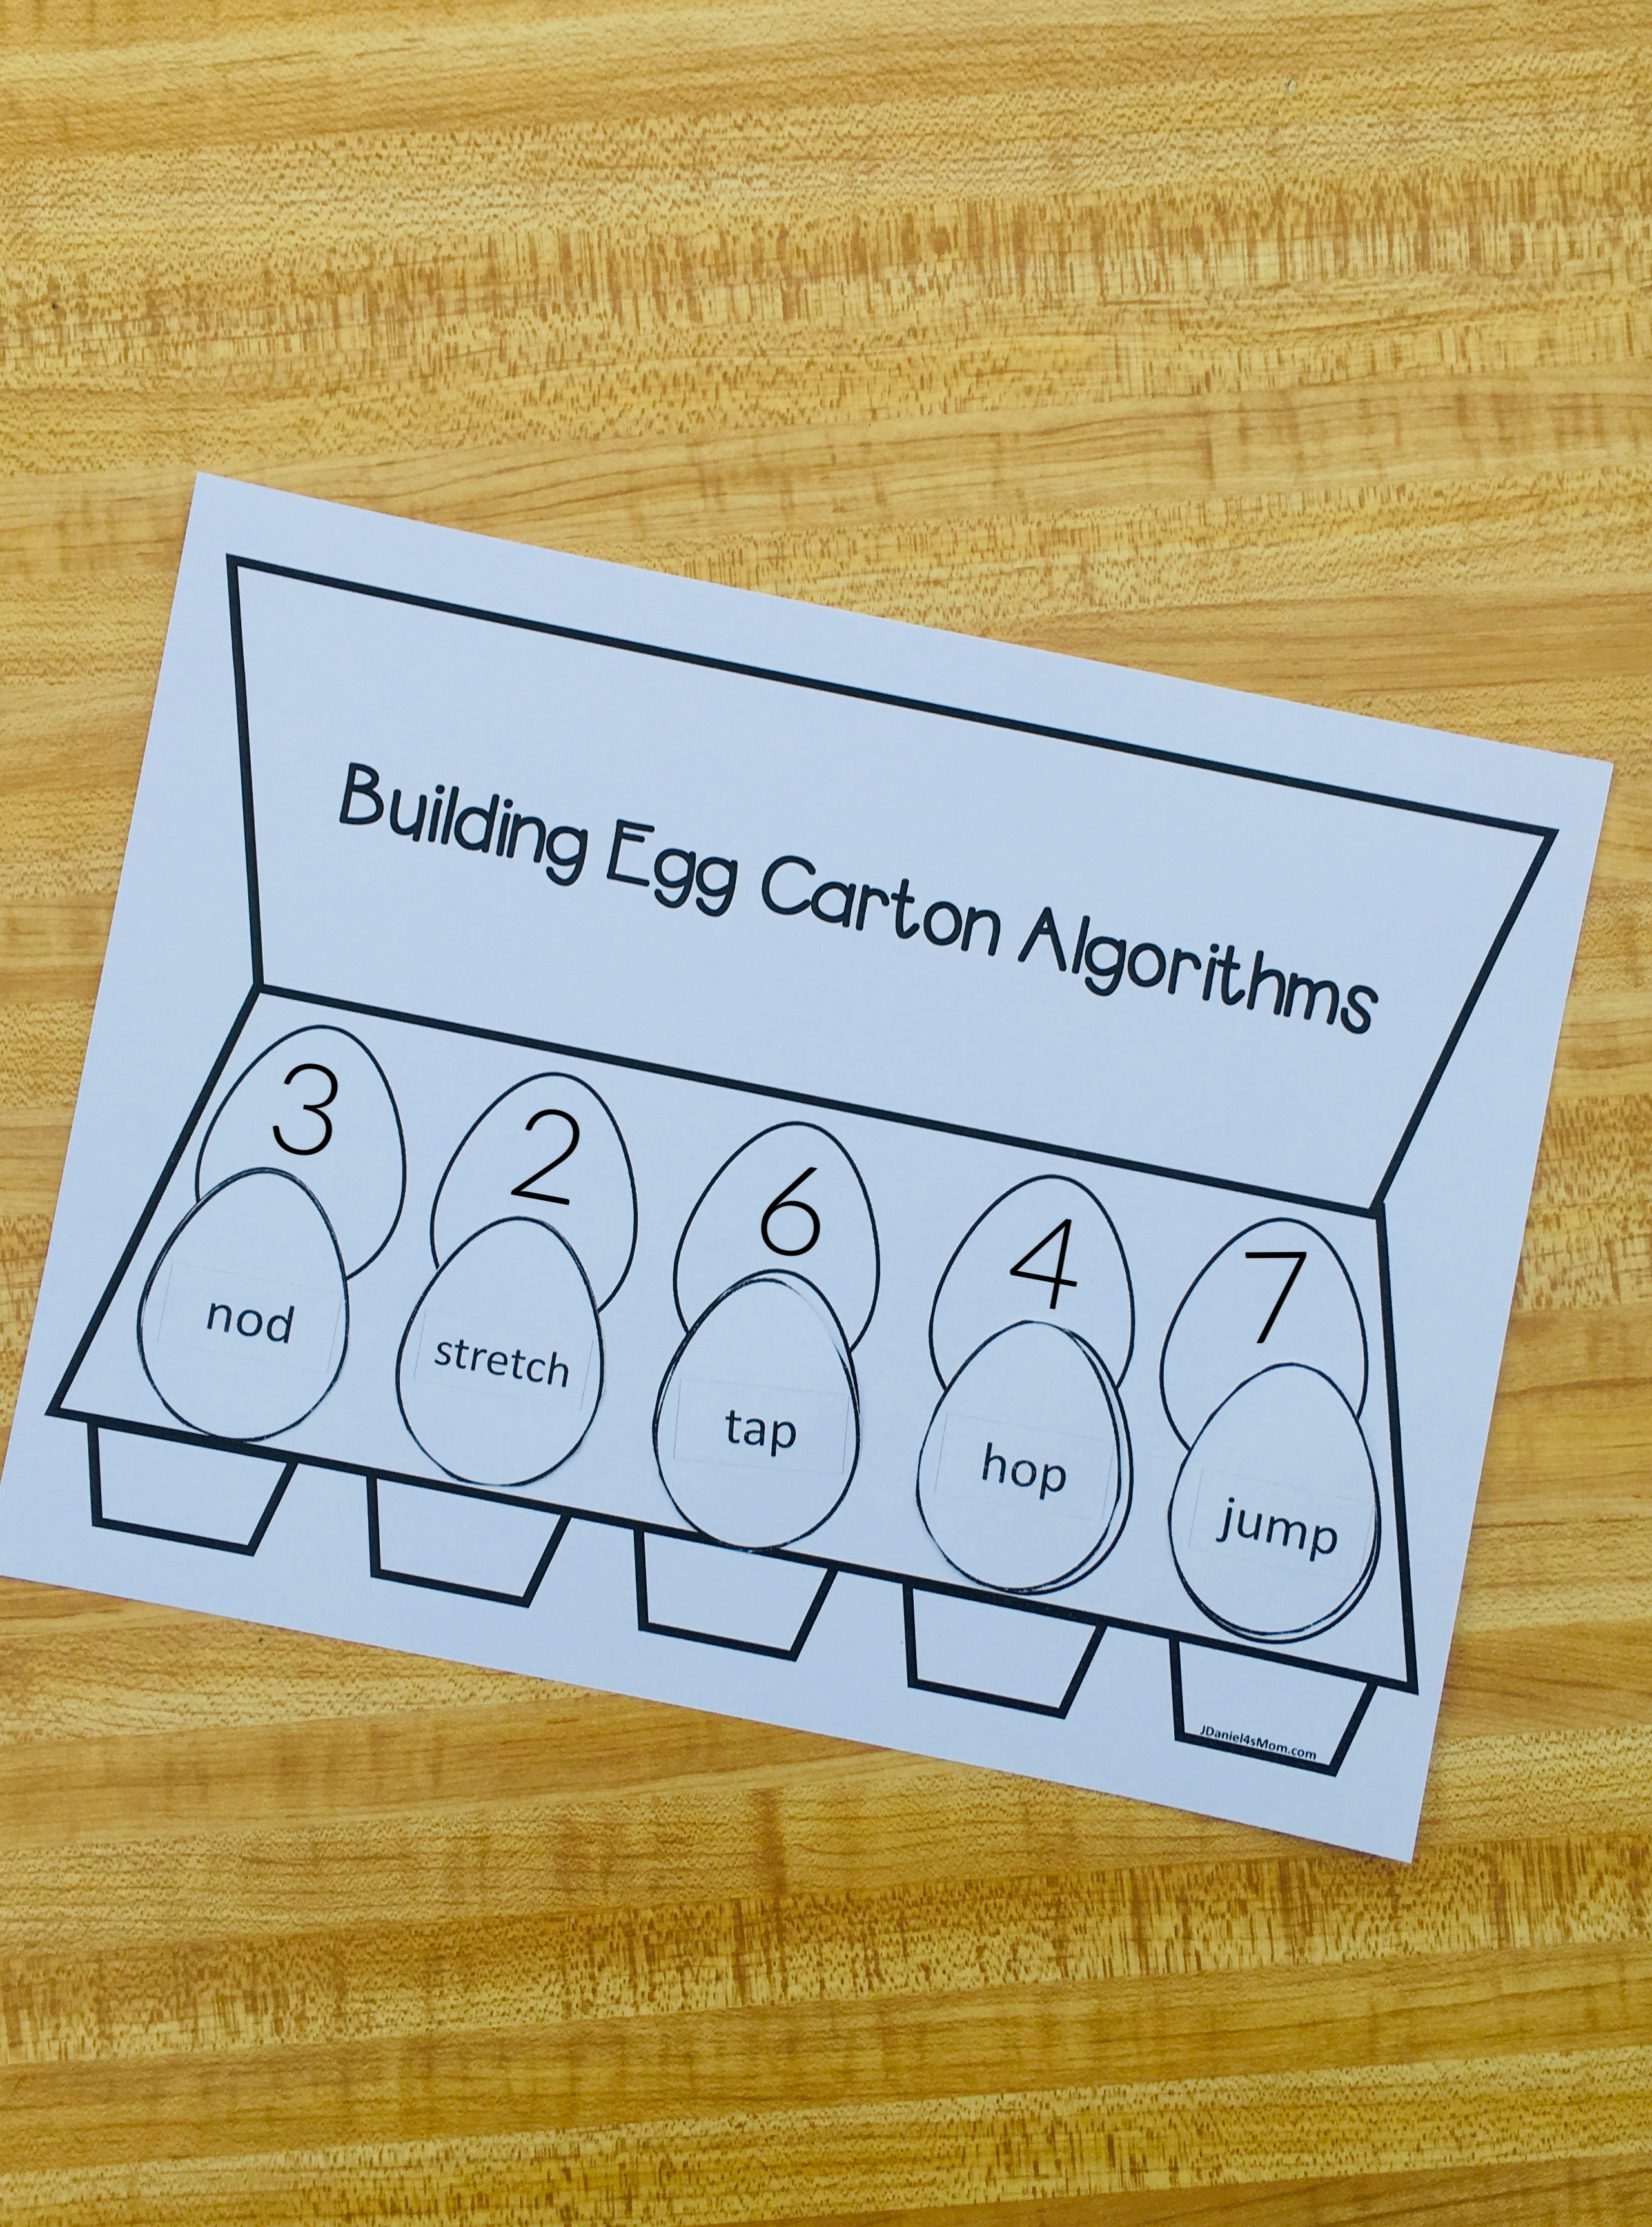 Gross Motor Building Egg Carton Algorithm Activities